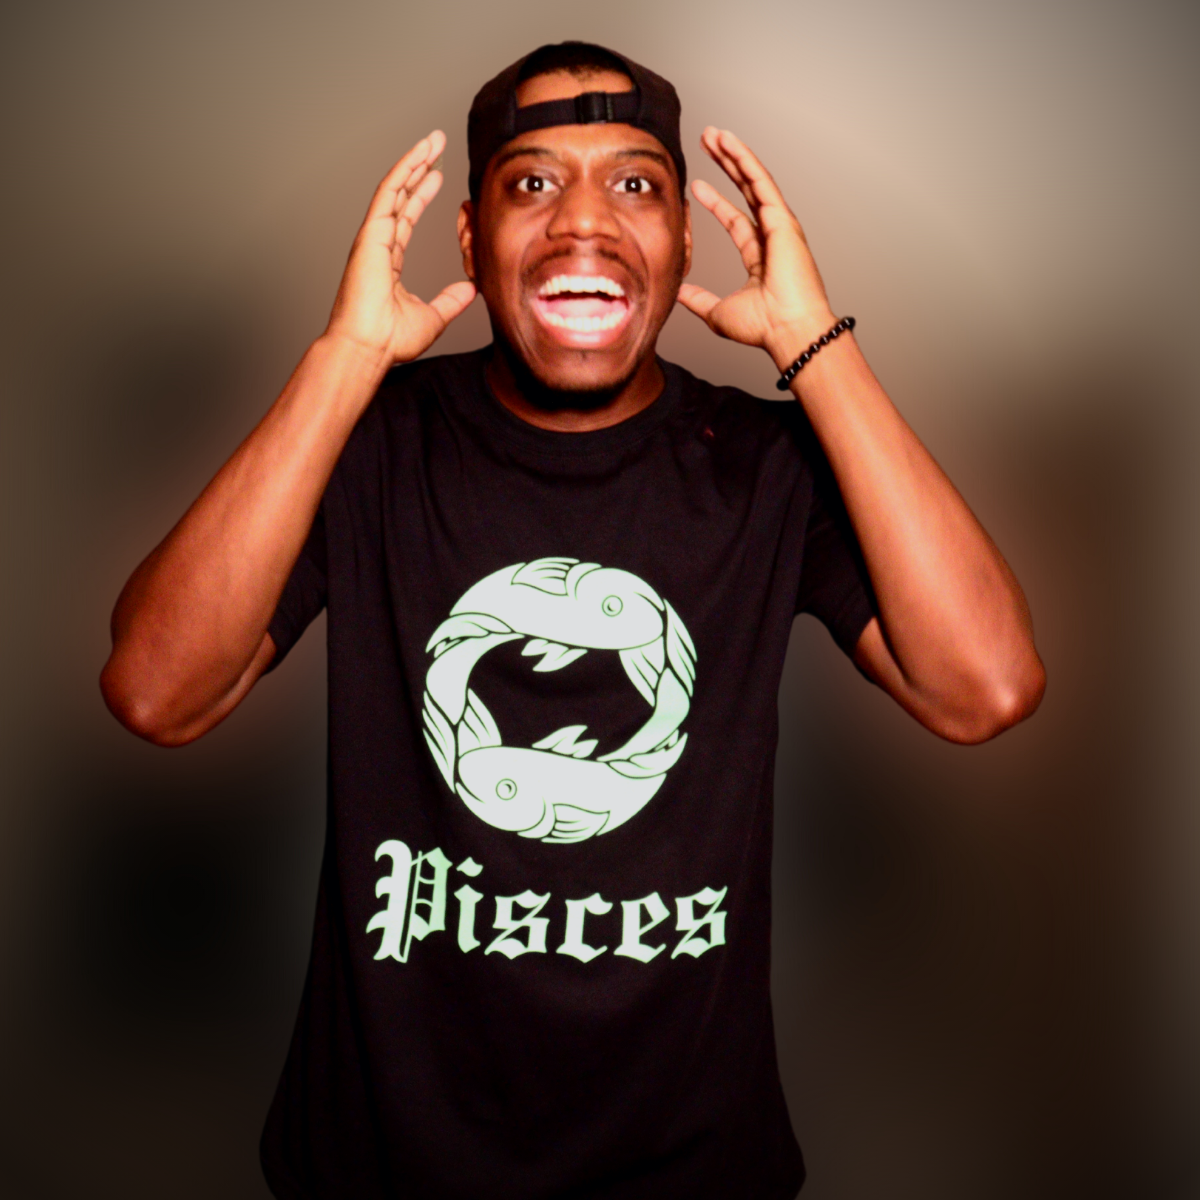 Pisces - Black & Sea Green T-Shirt